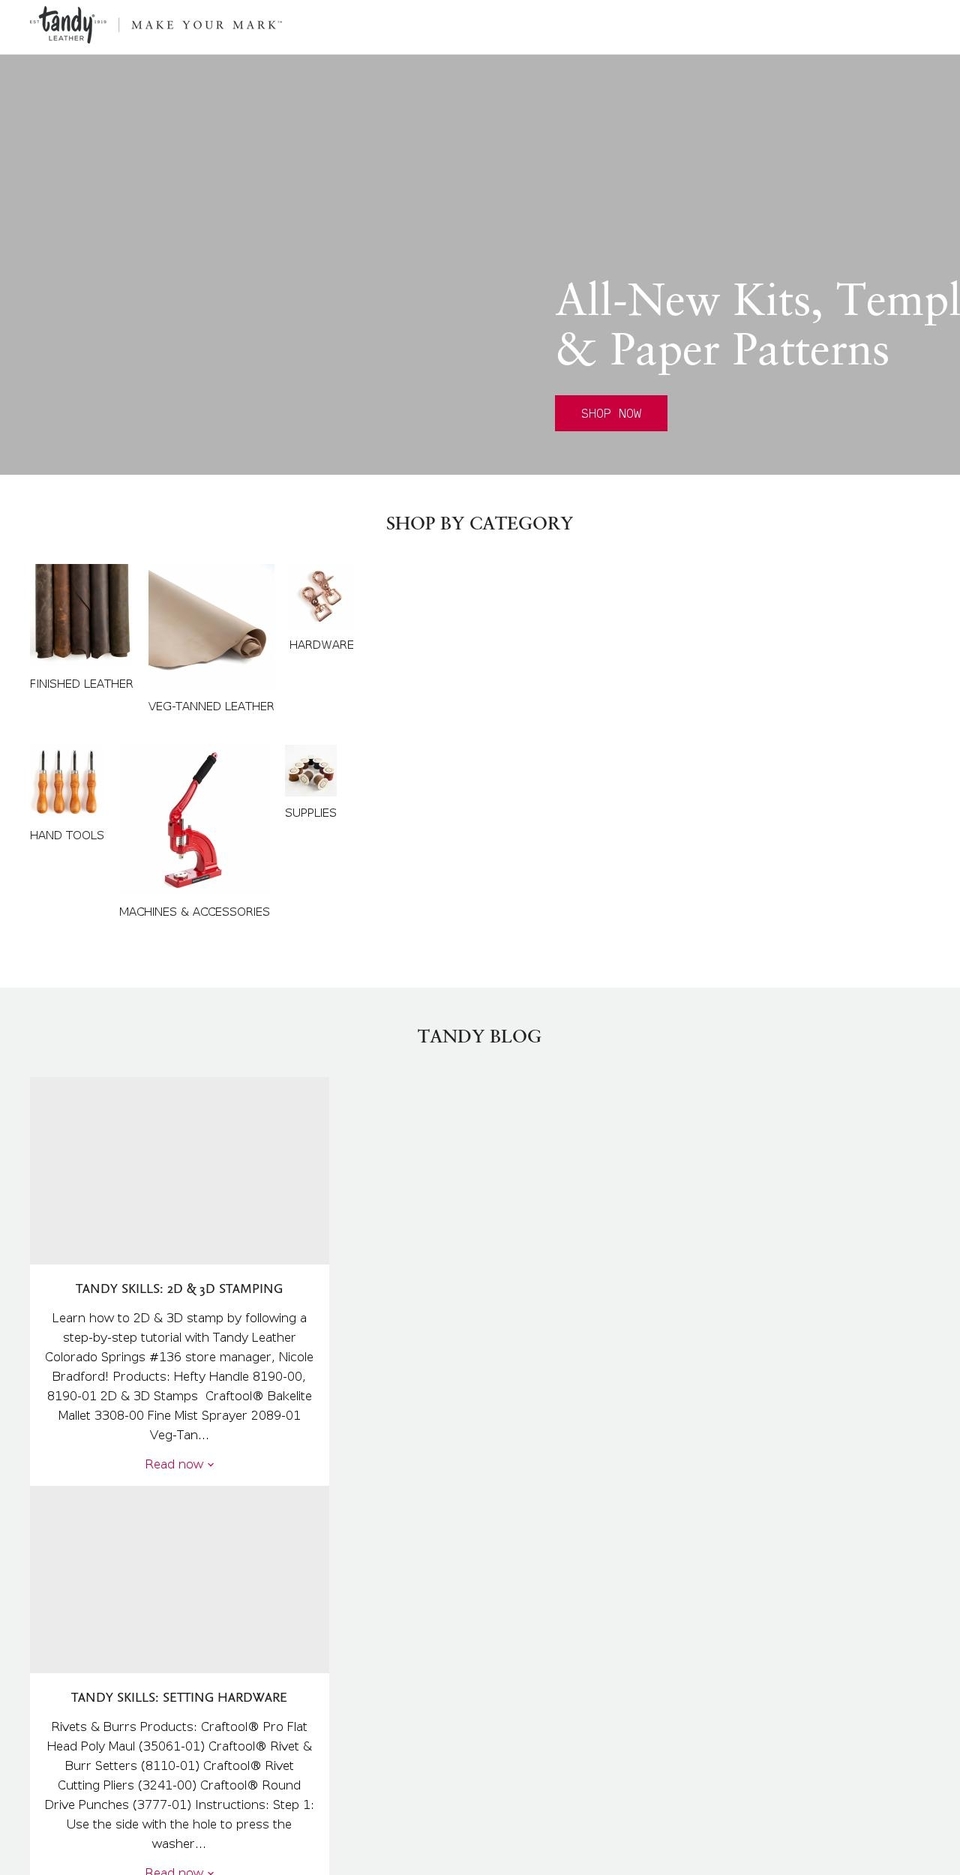 tandyleatherfactory.uk shopify website screenshot